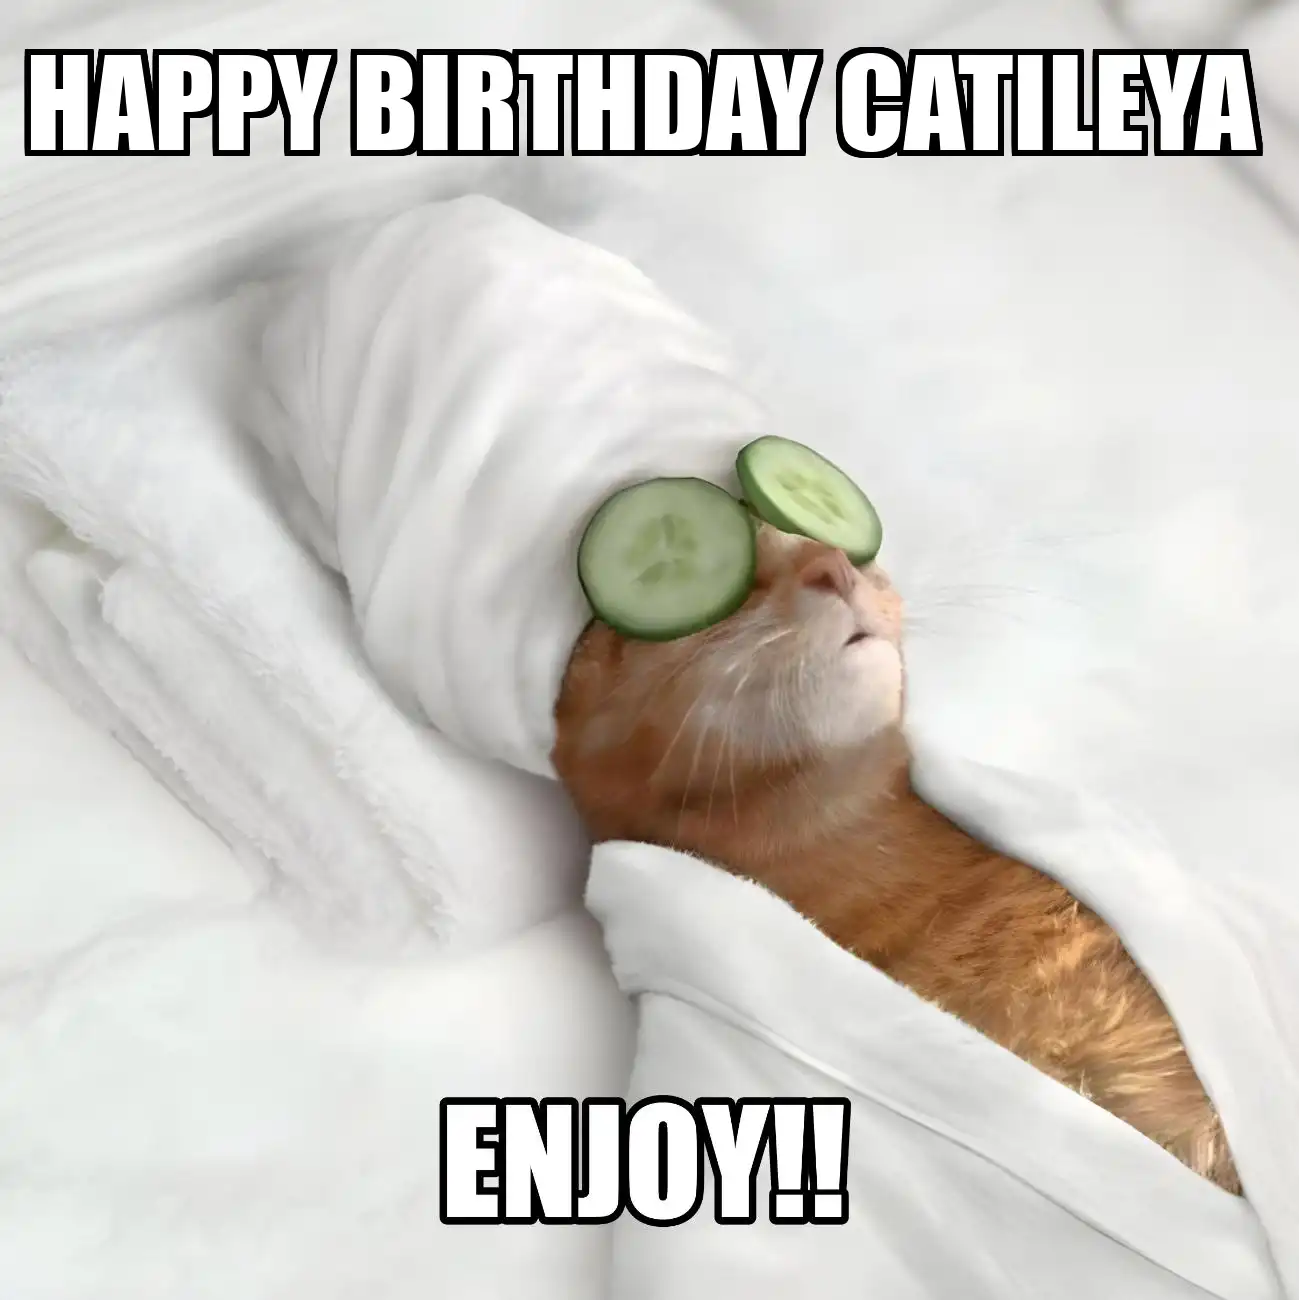 Happy Birthday Catileya Enjoy Cat Meme